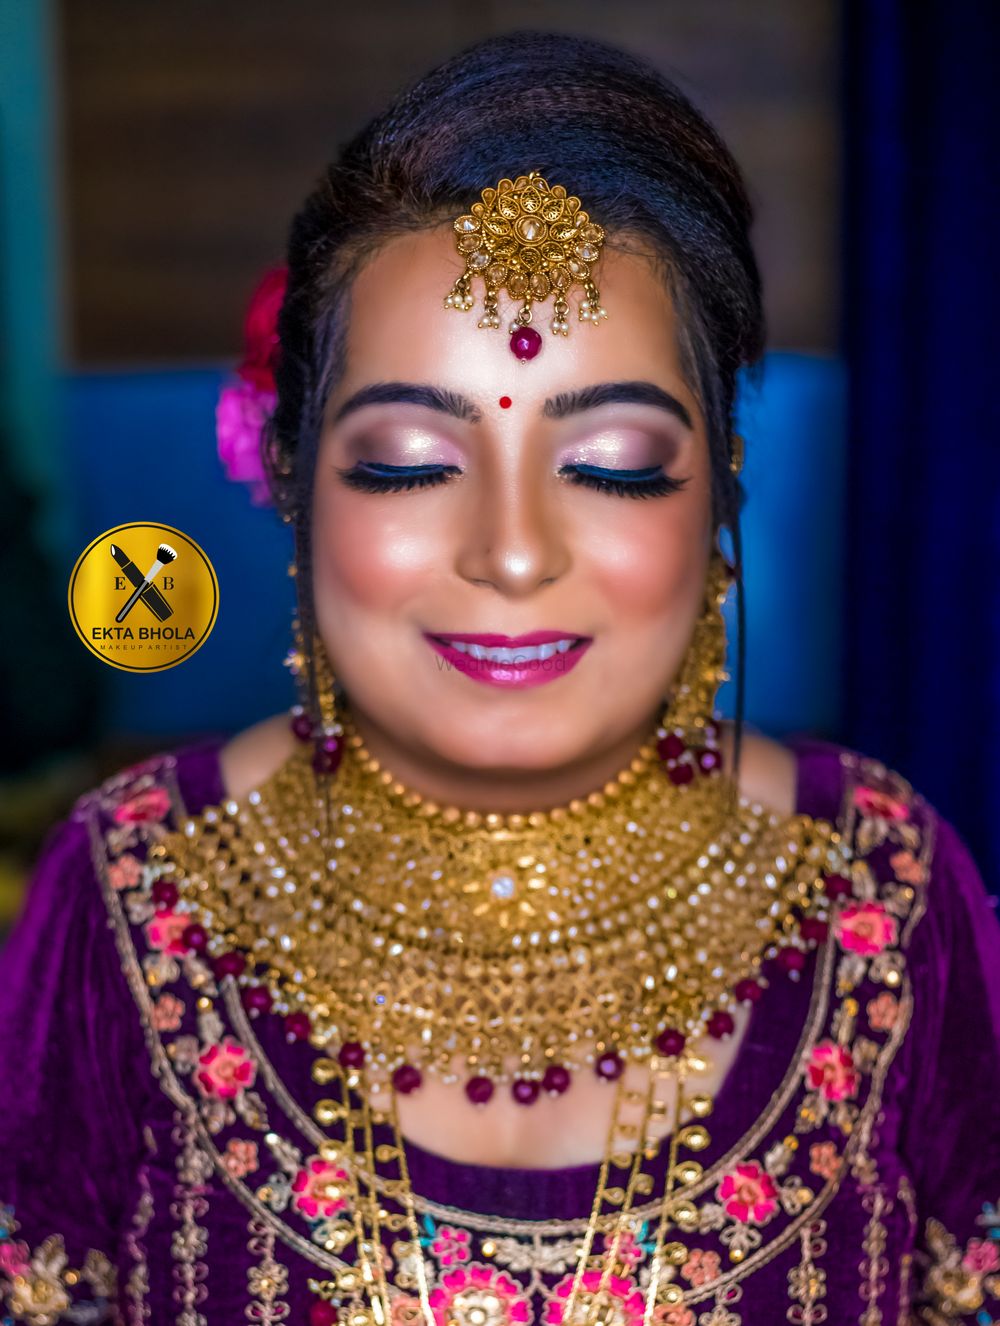 Photo From Malvika, Bridal - By Makeup Artistry by Ekta Bhola